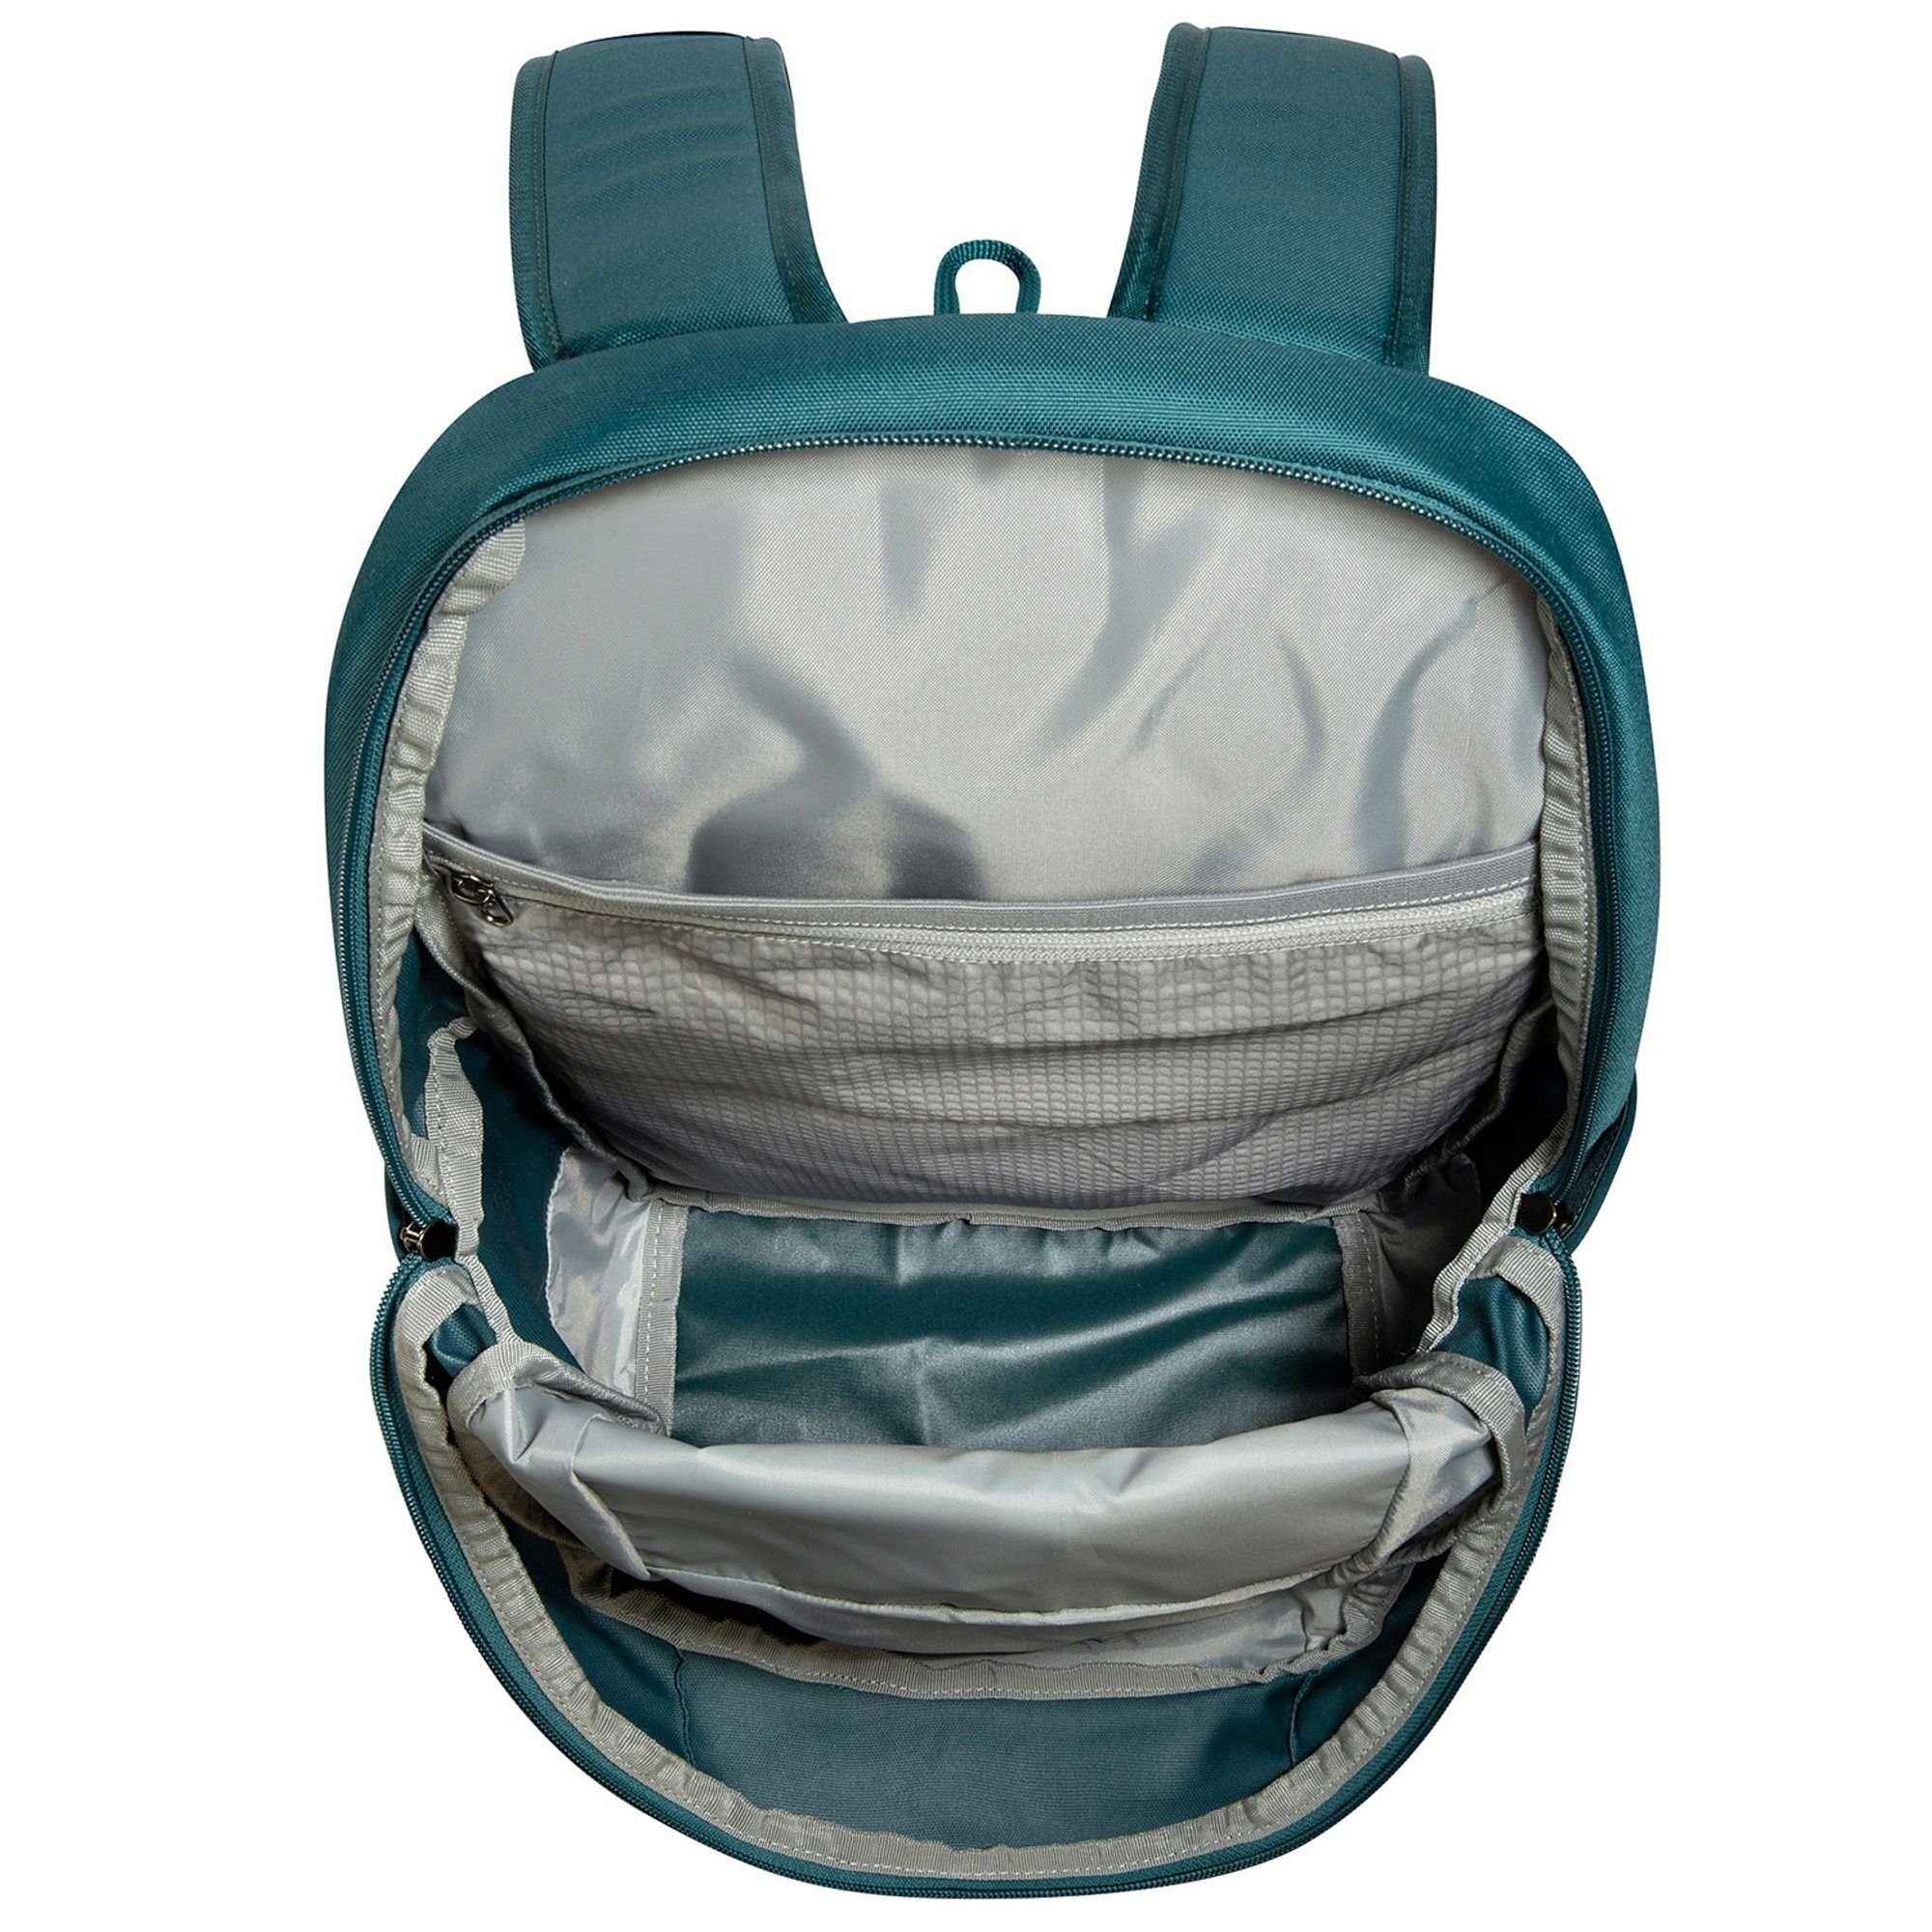 teal City Rucksack Pack, Polyester TATONKA® green-jasper